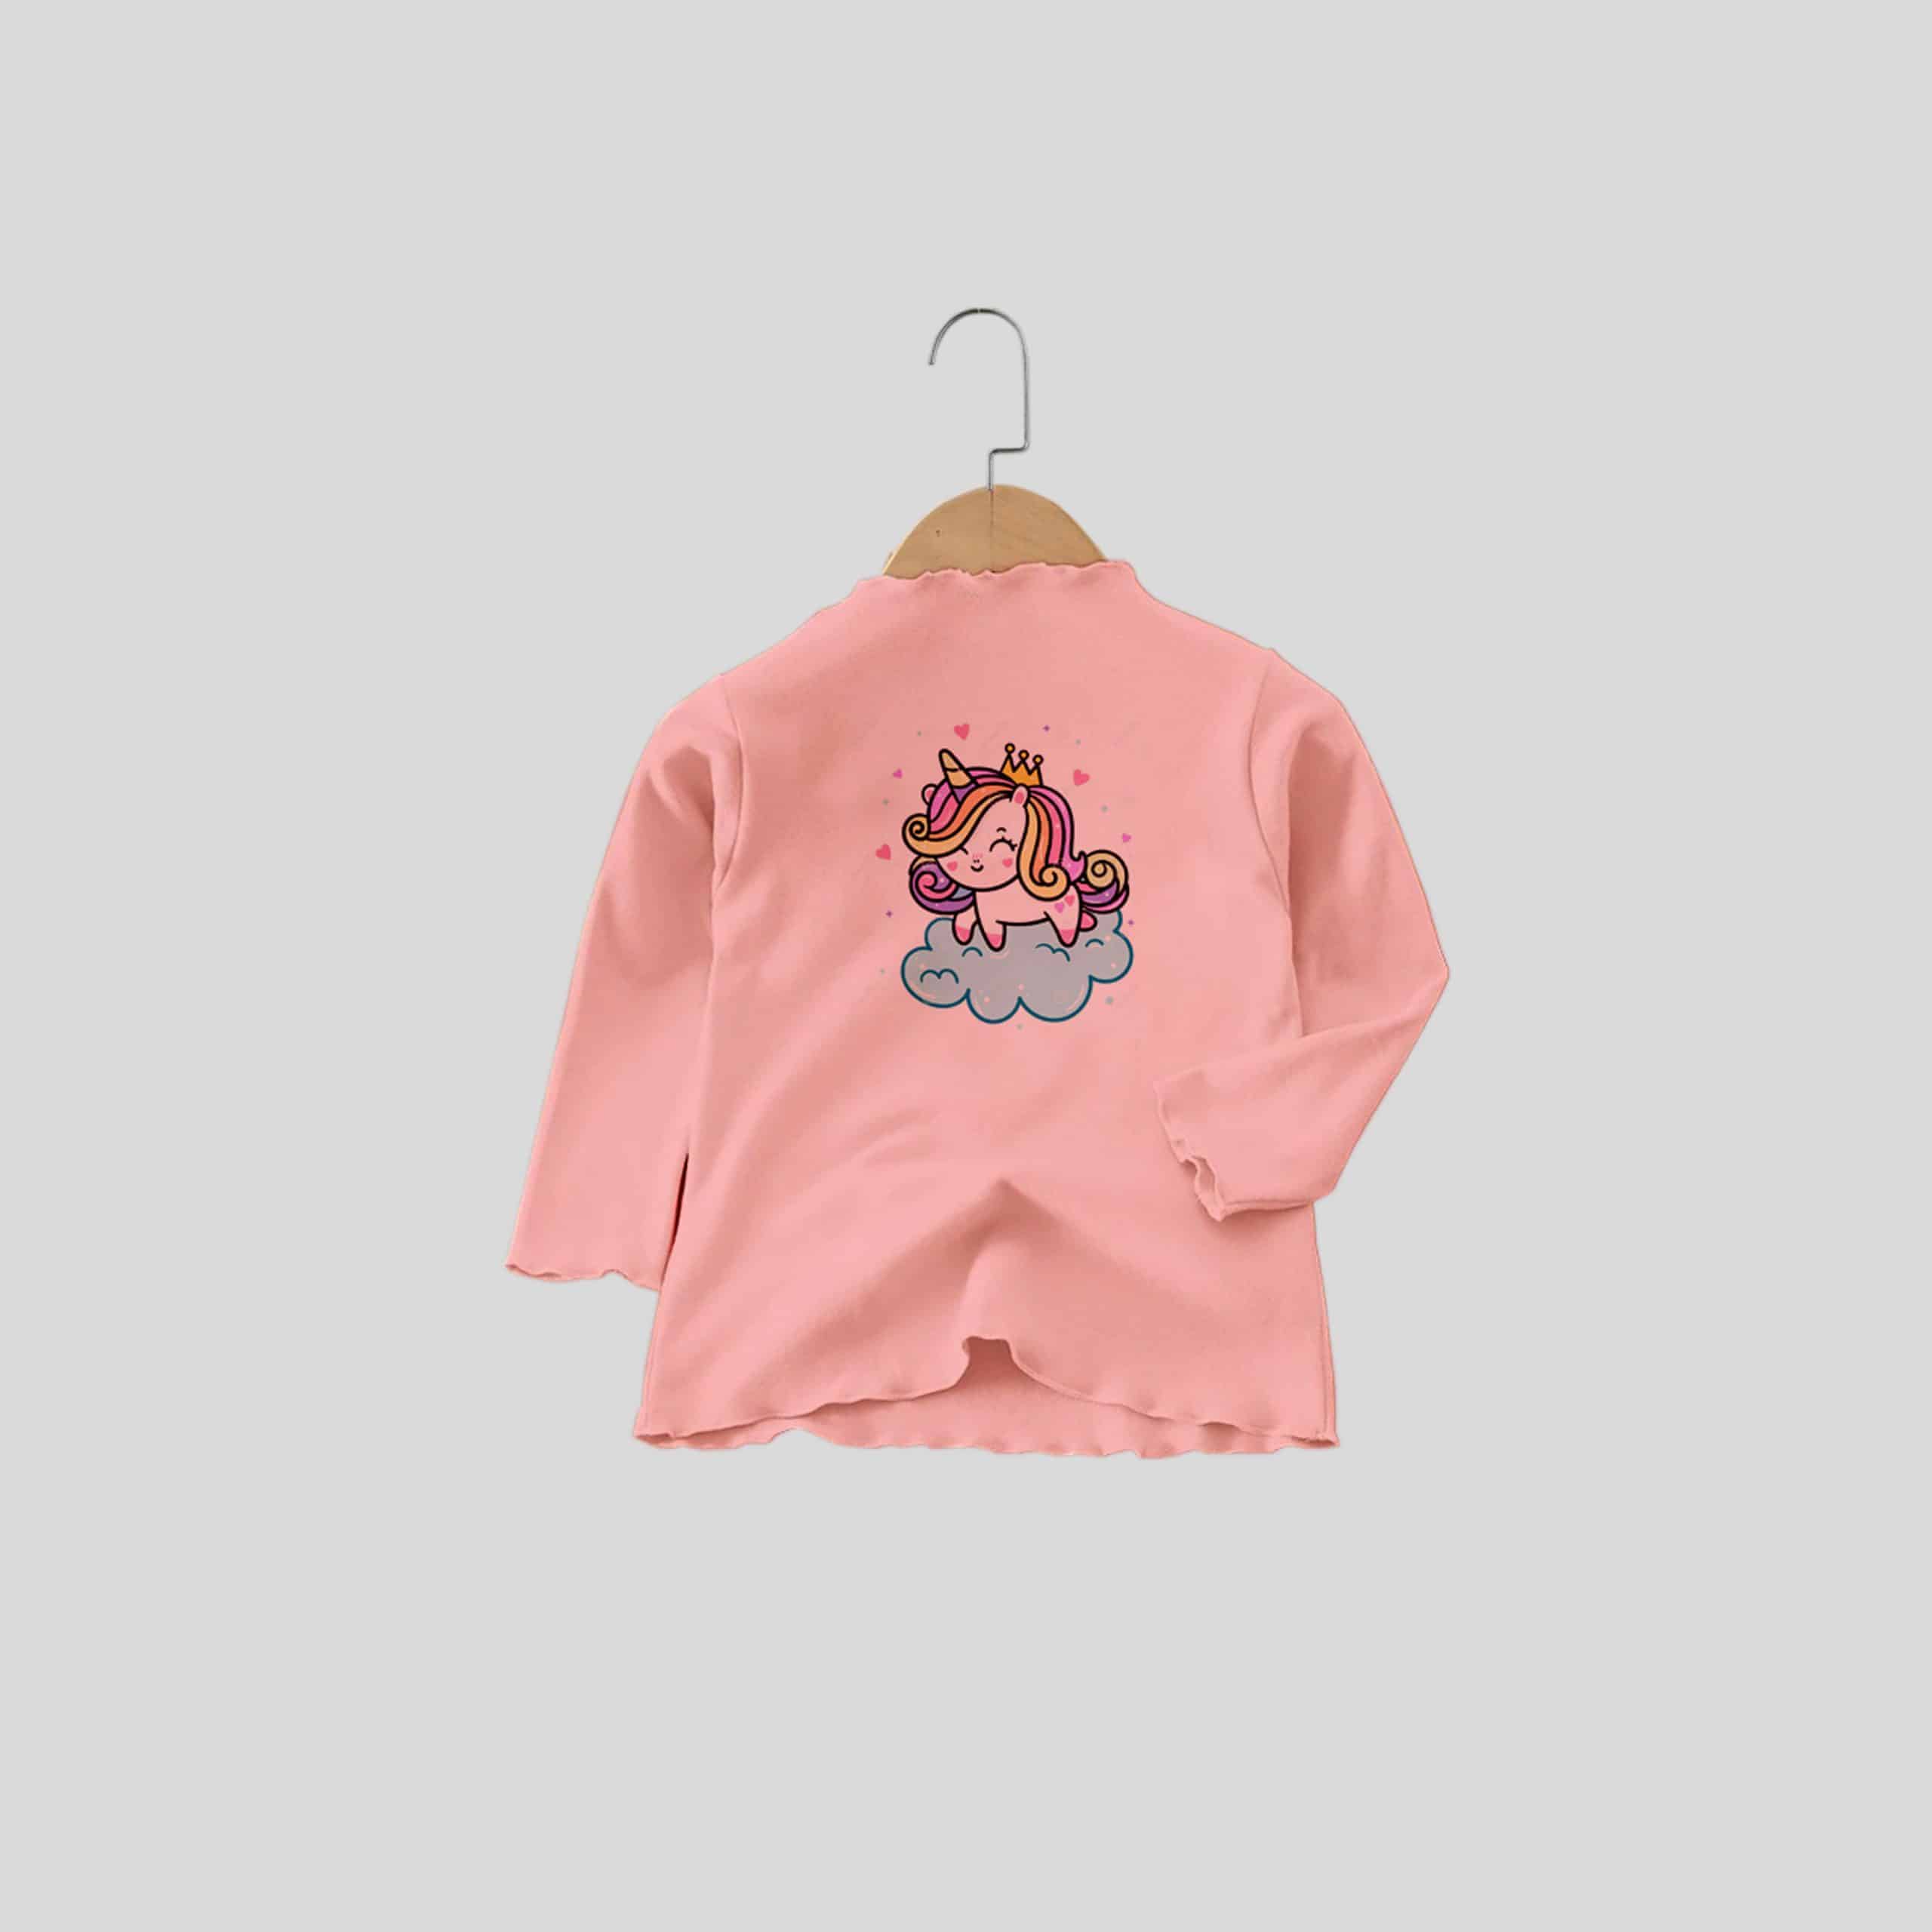 Girls Pink Top with Cute Unicorn Print - RKFCW326